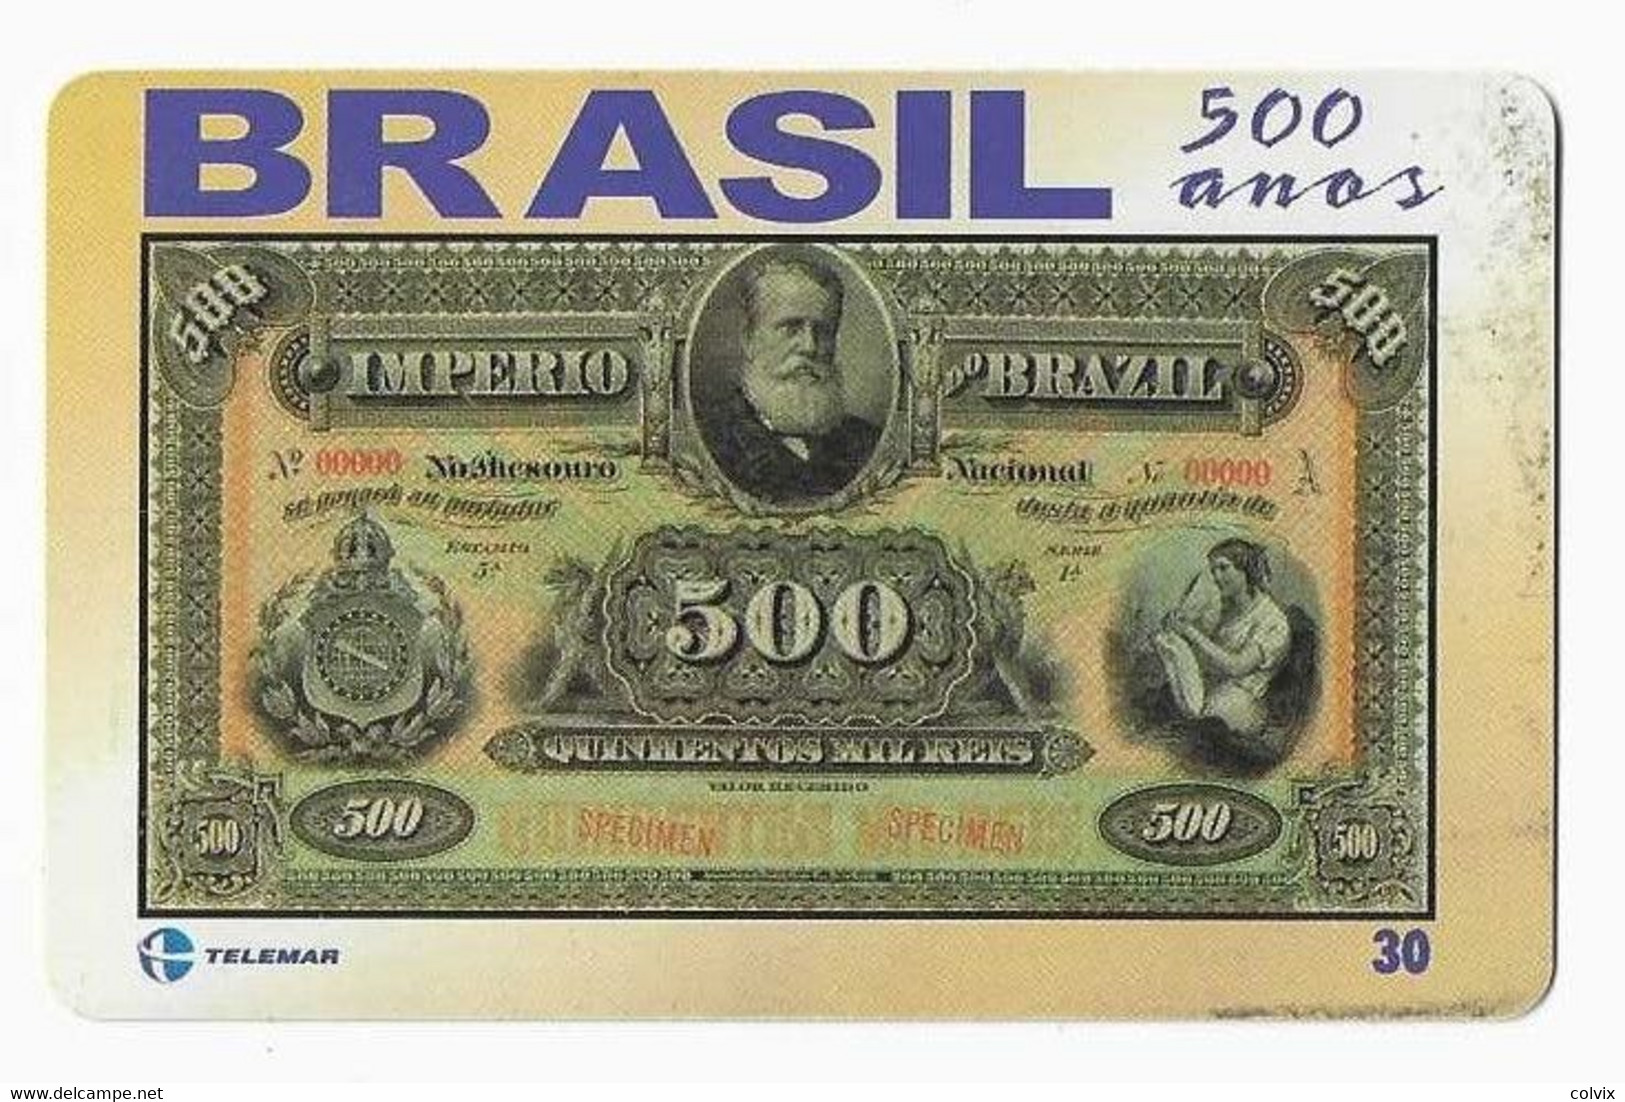 BRESIL TELECARTE BILLET DE BANQUE 1885 - Stamps & Coins